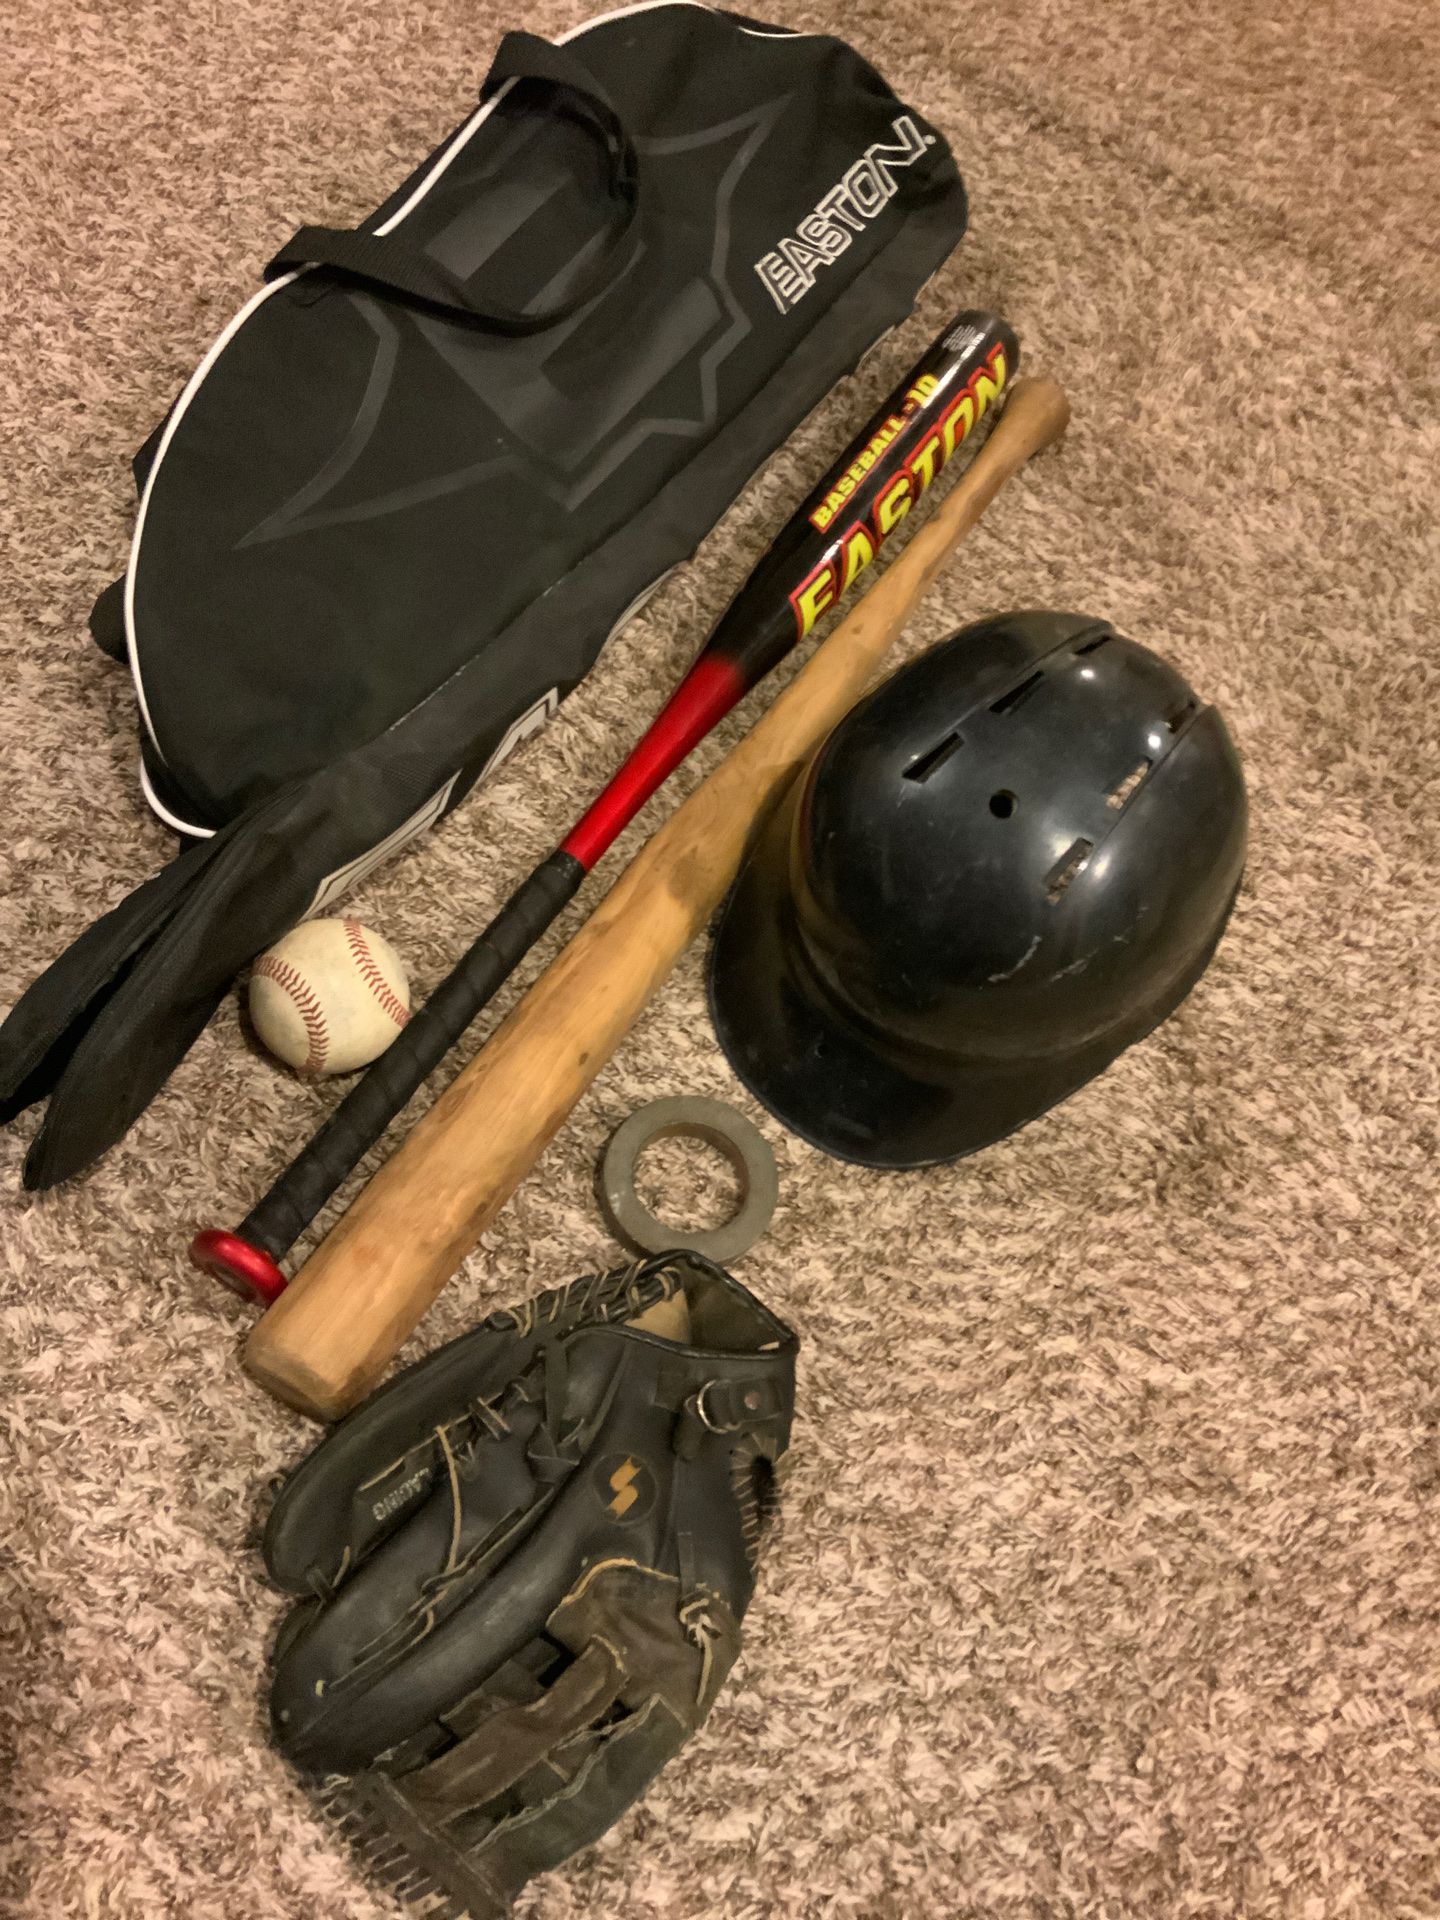 Baseball Gear and Bag